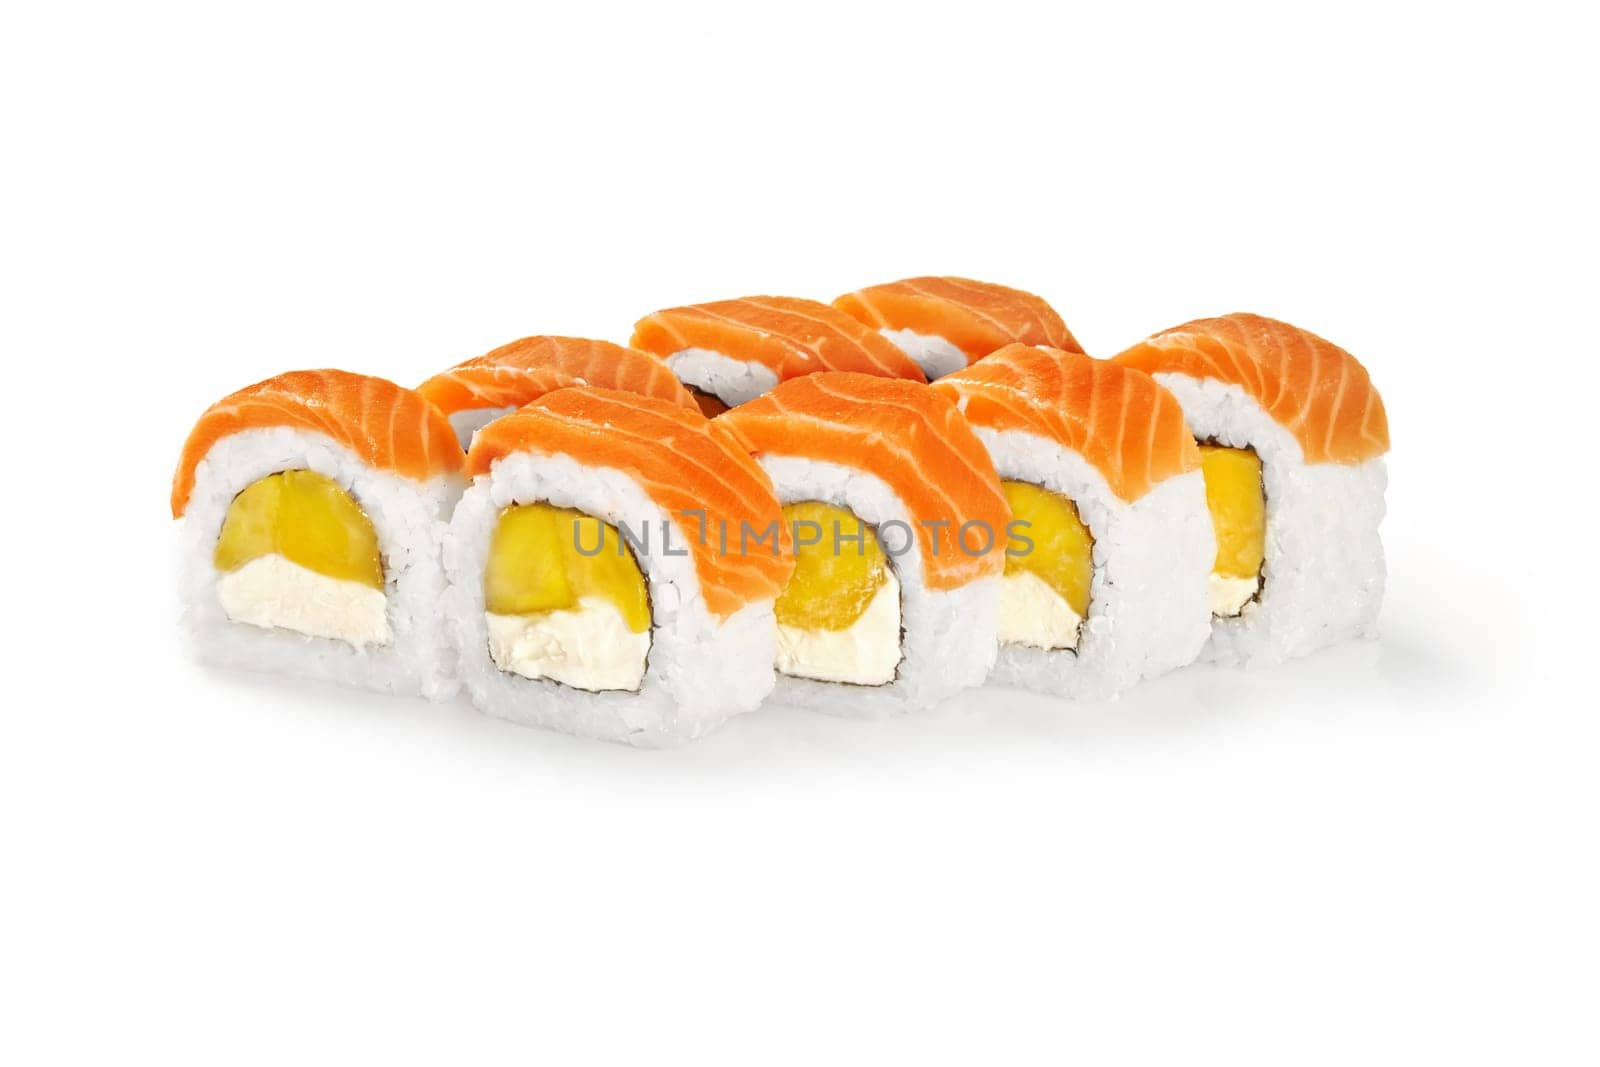 Salmon sushi rolls with cream cheese and mango on white by nazarovsergey